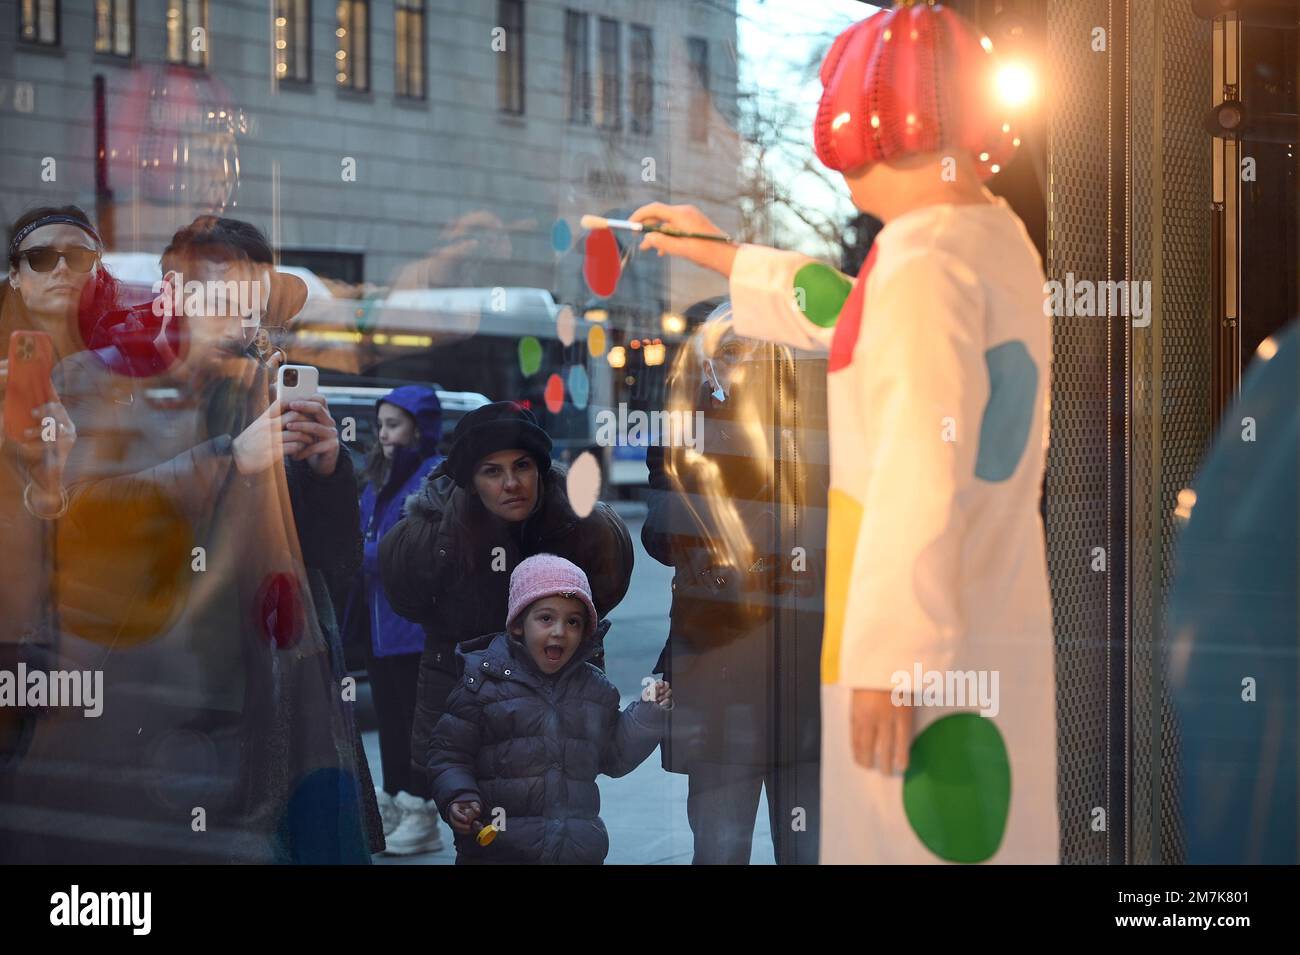 Creepy life-like robot of artist Yayoi Kusama spotted painting shop window  in New York